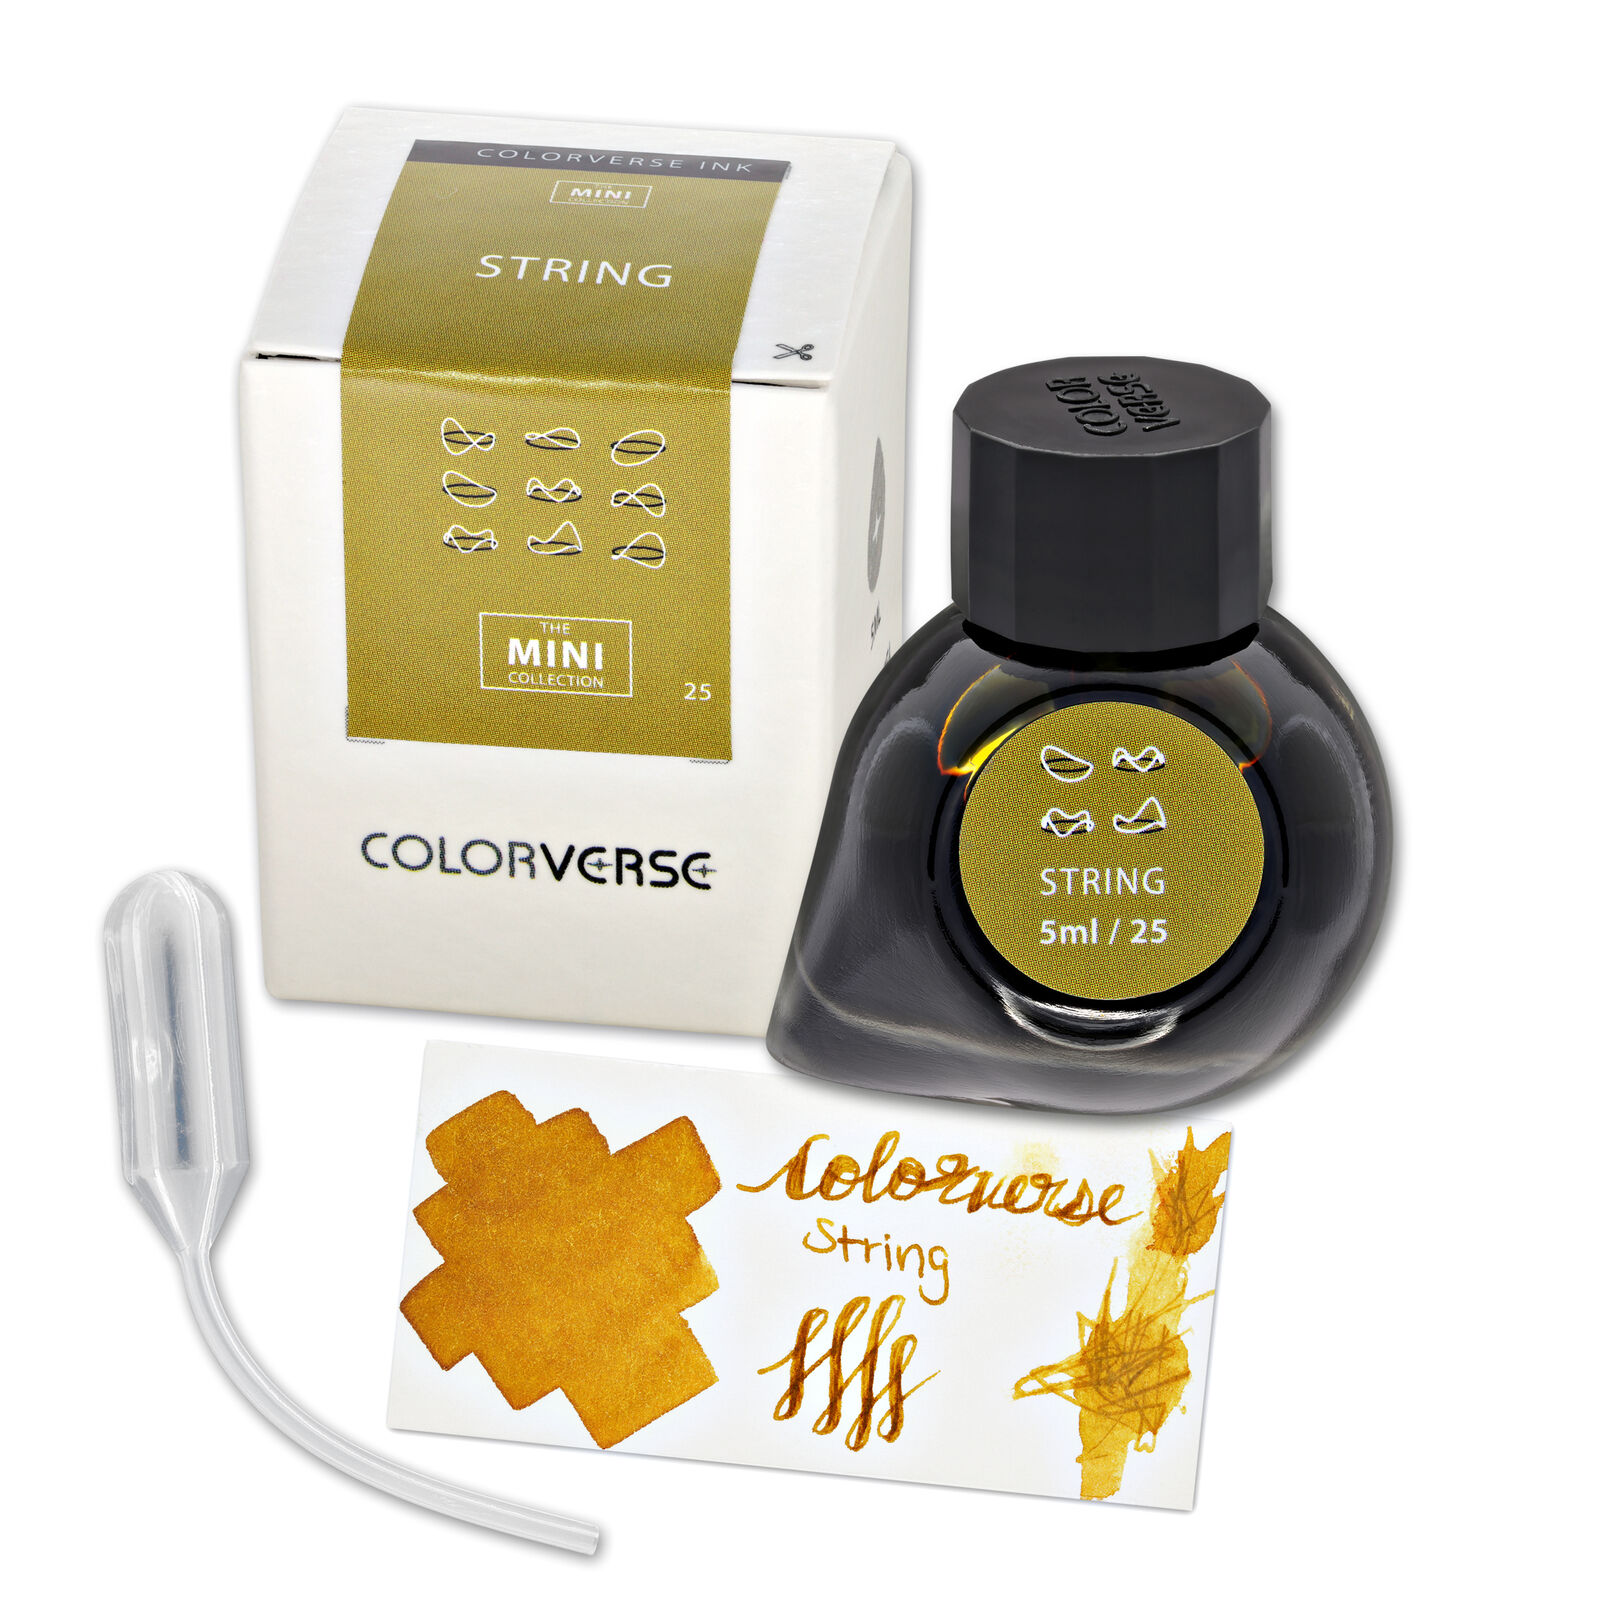 Colorverse Multiverse Mini Bottled Ink in String - 5mL - NEW in Box